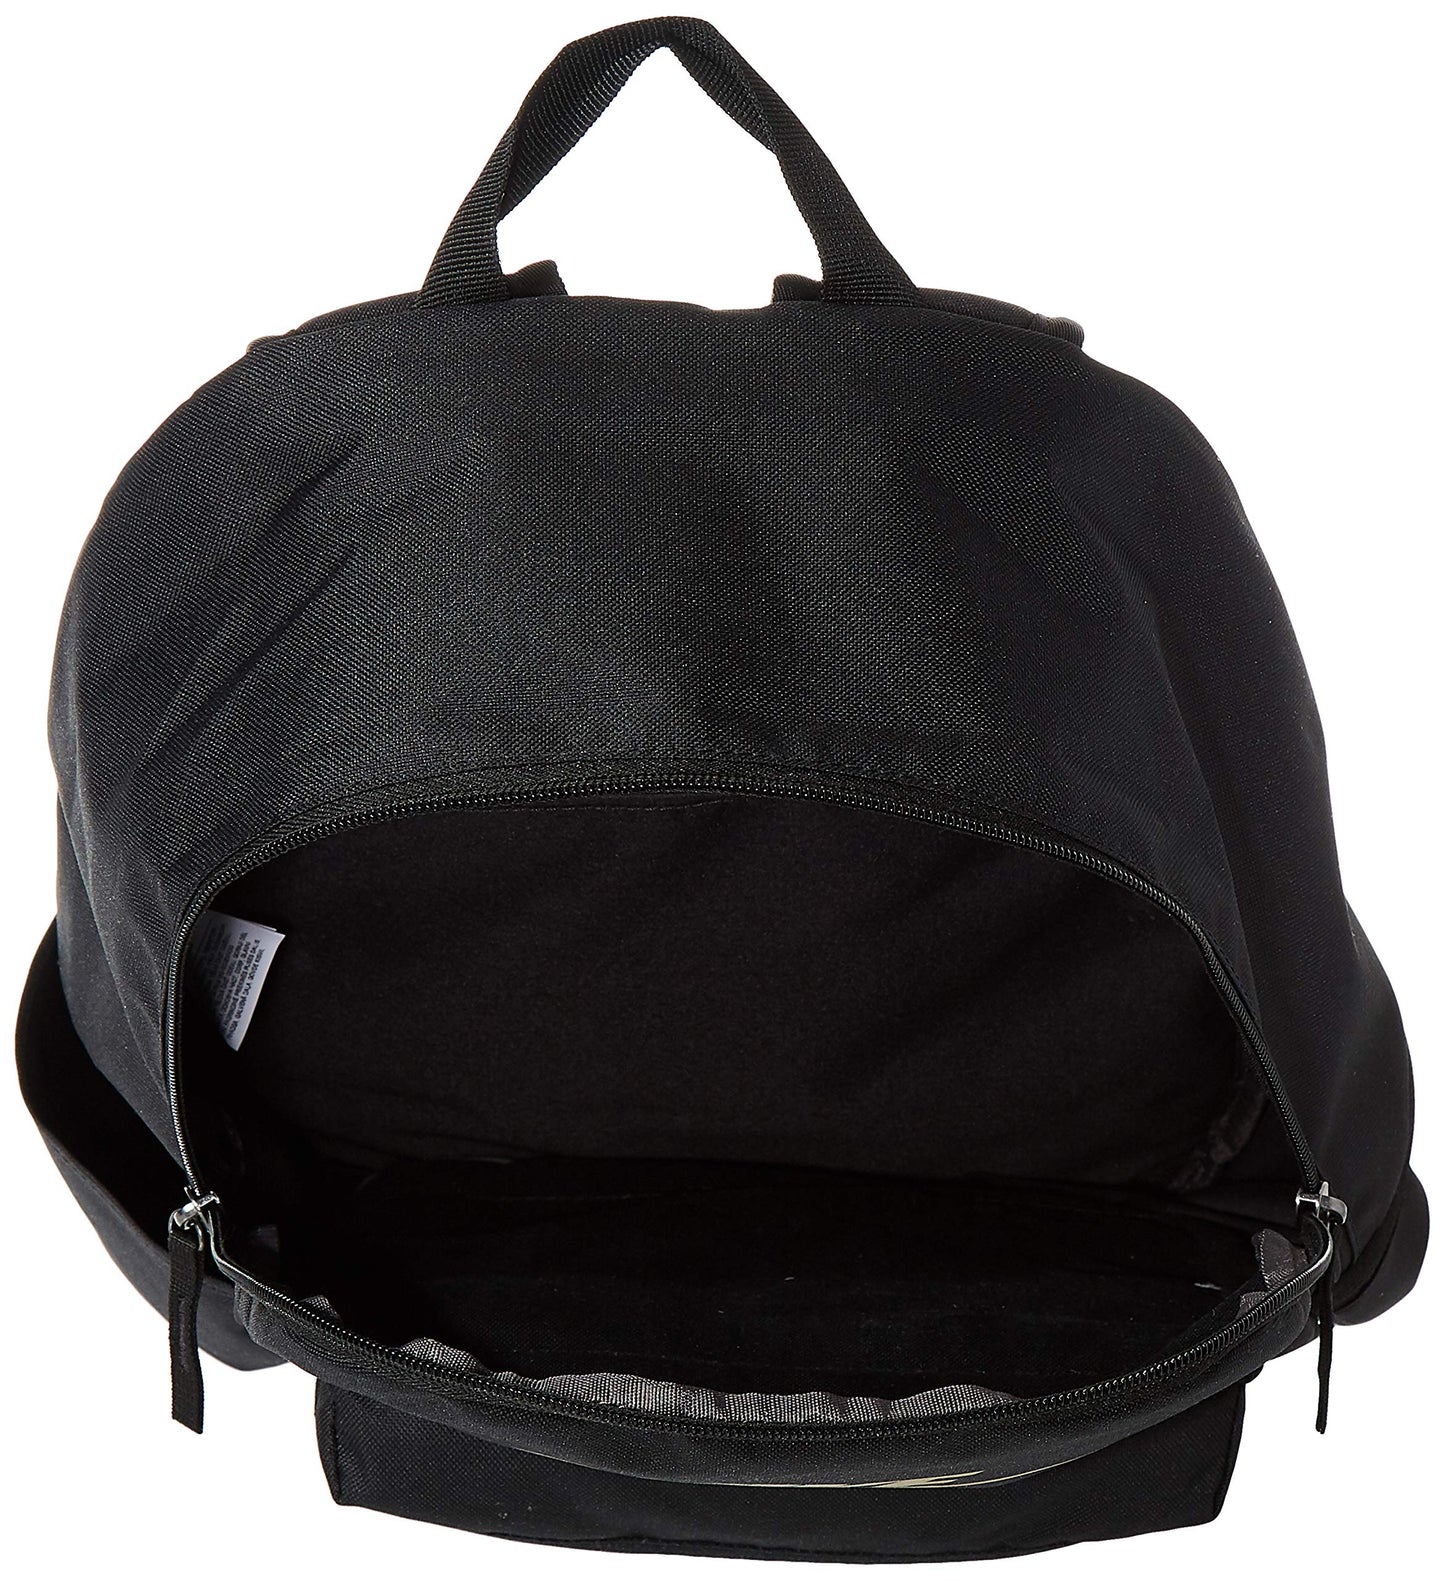 Nike Heritage Backpack-2.0